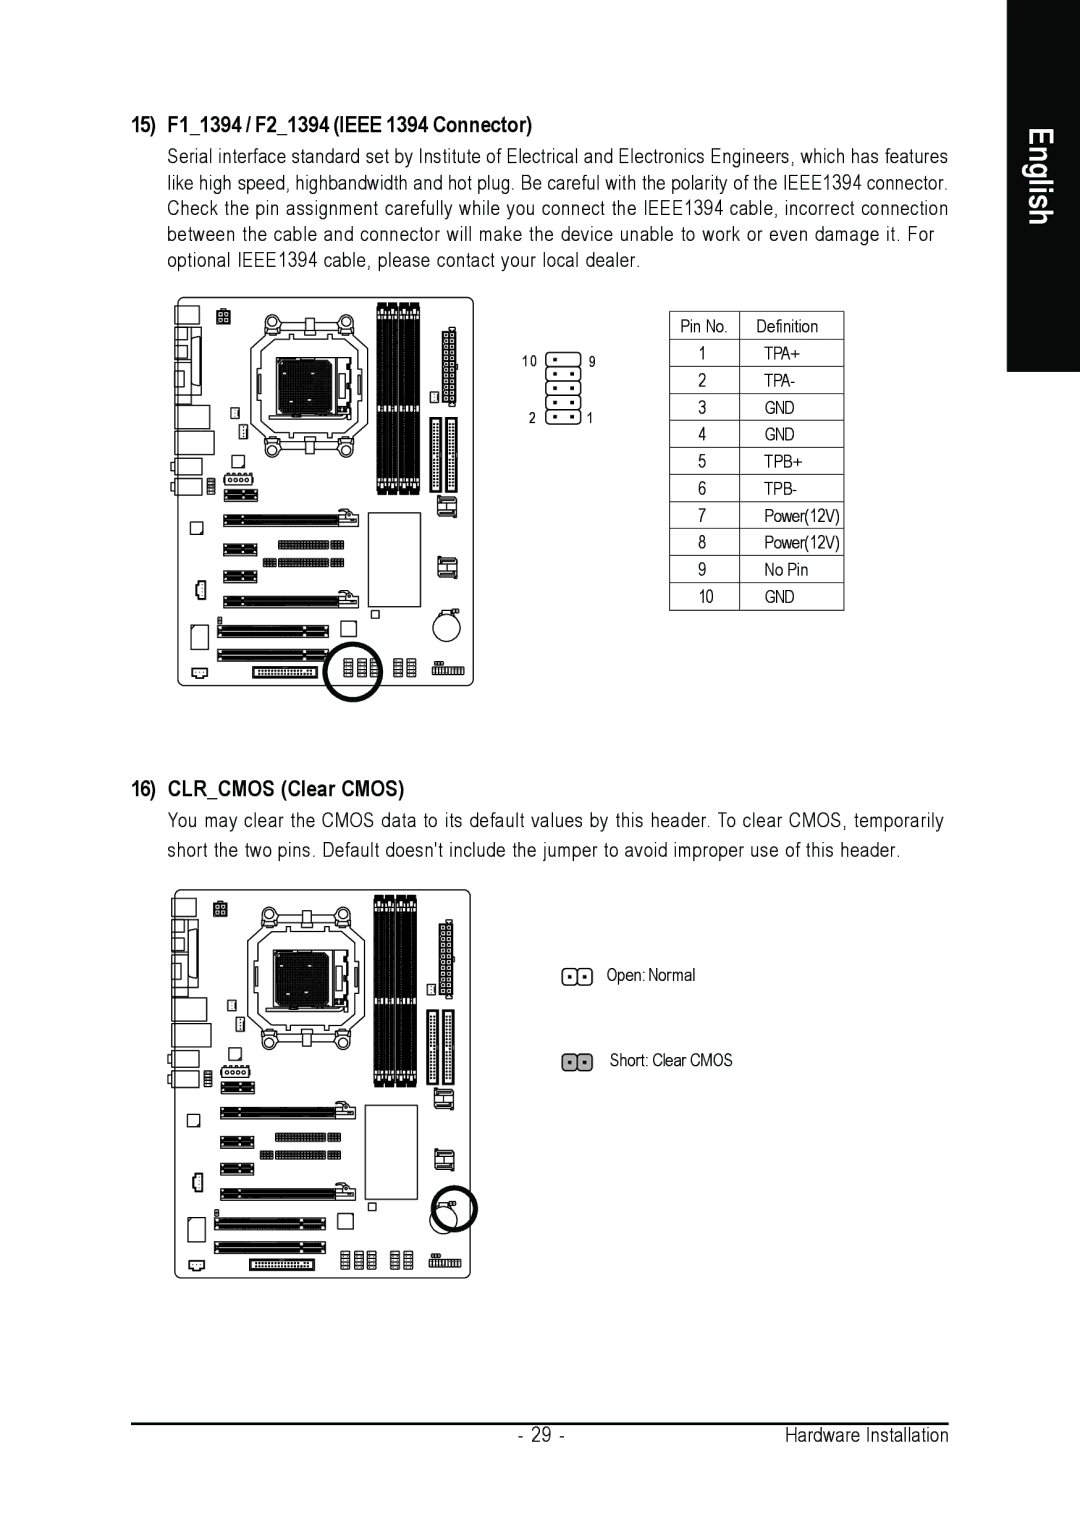 Gigabyte GA-M55SLI-S4 user manual 15 F11394 / F21394 Ieee 1394 Connector, Clrcmos Clear Cmos 